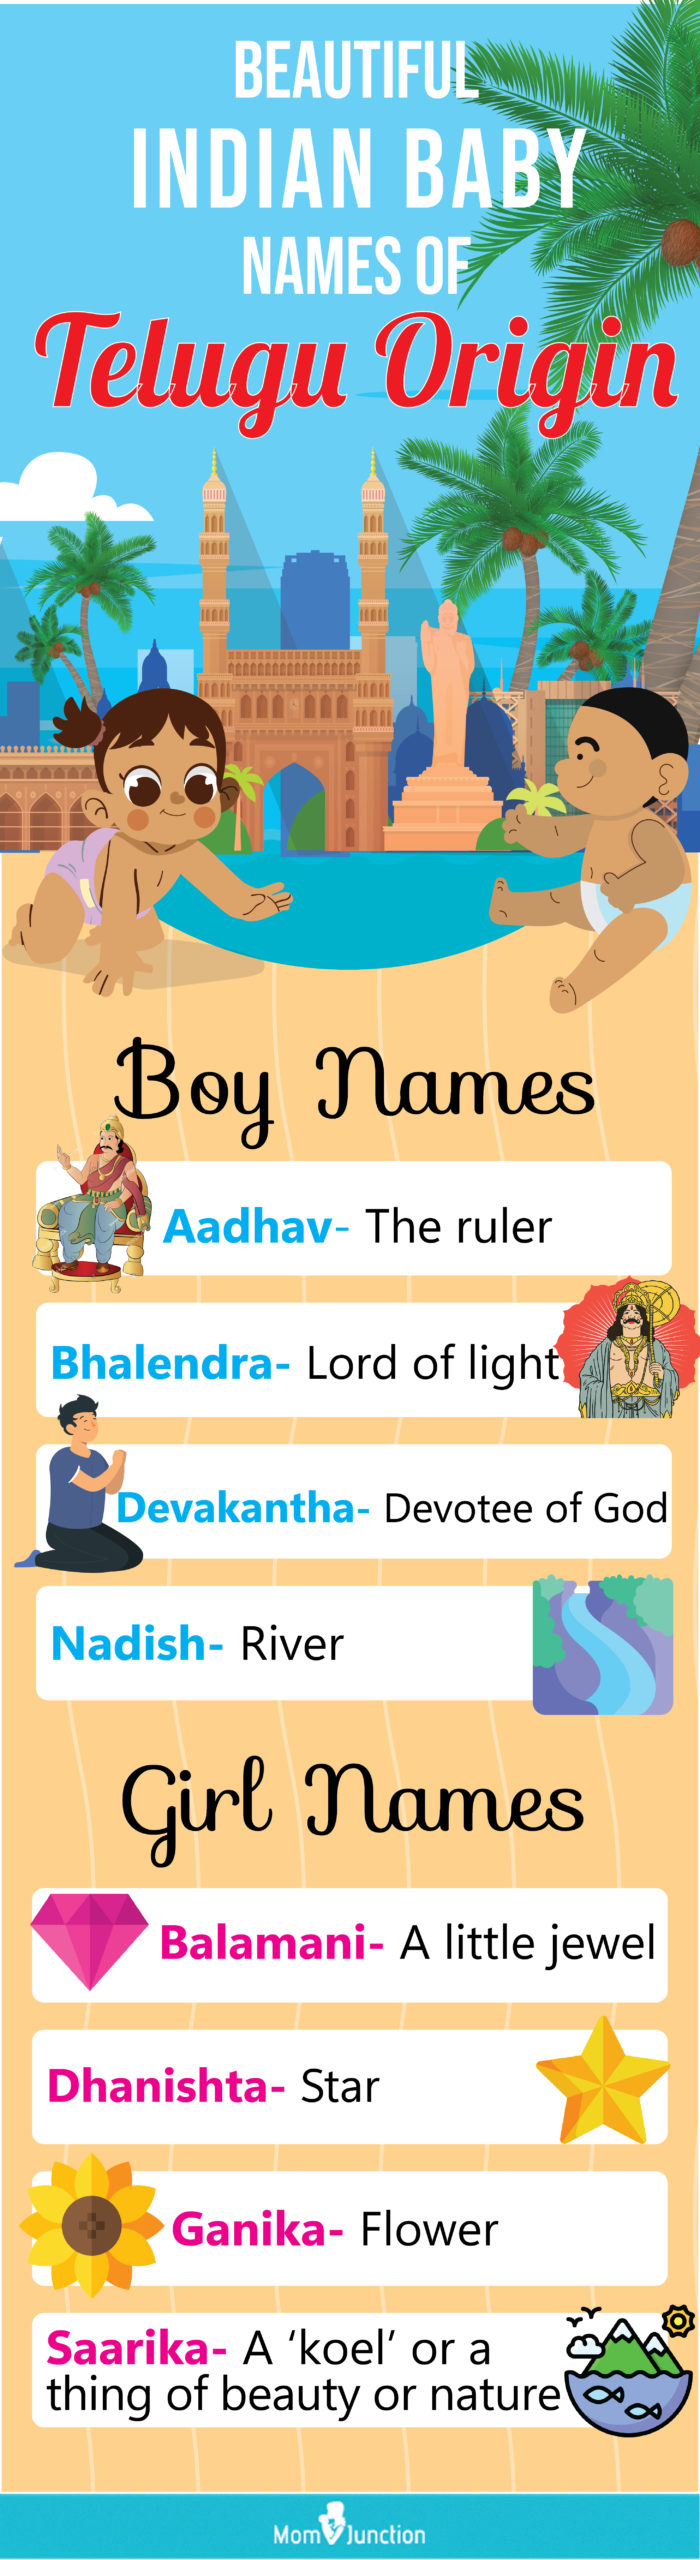 beautiful indian baby names of telugu origin (infographic)